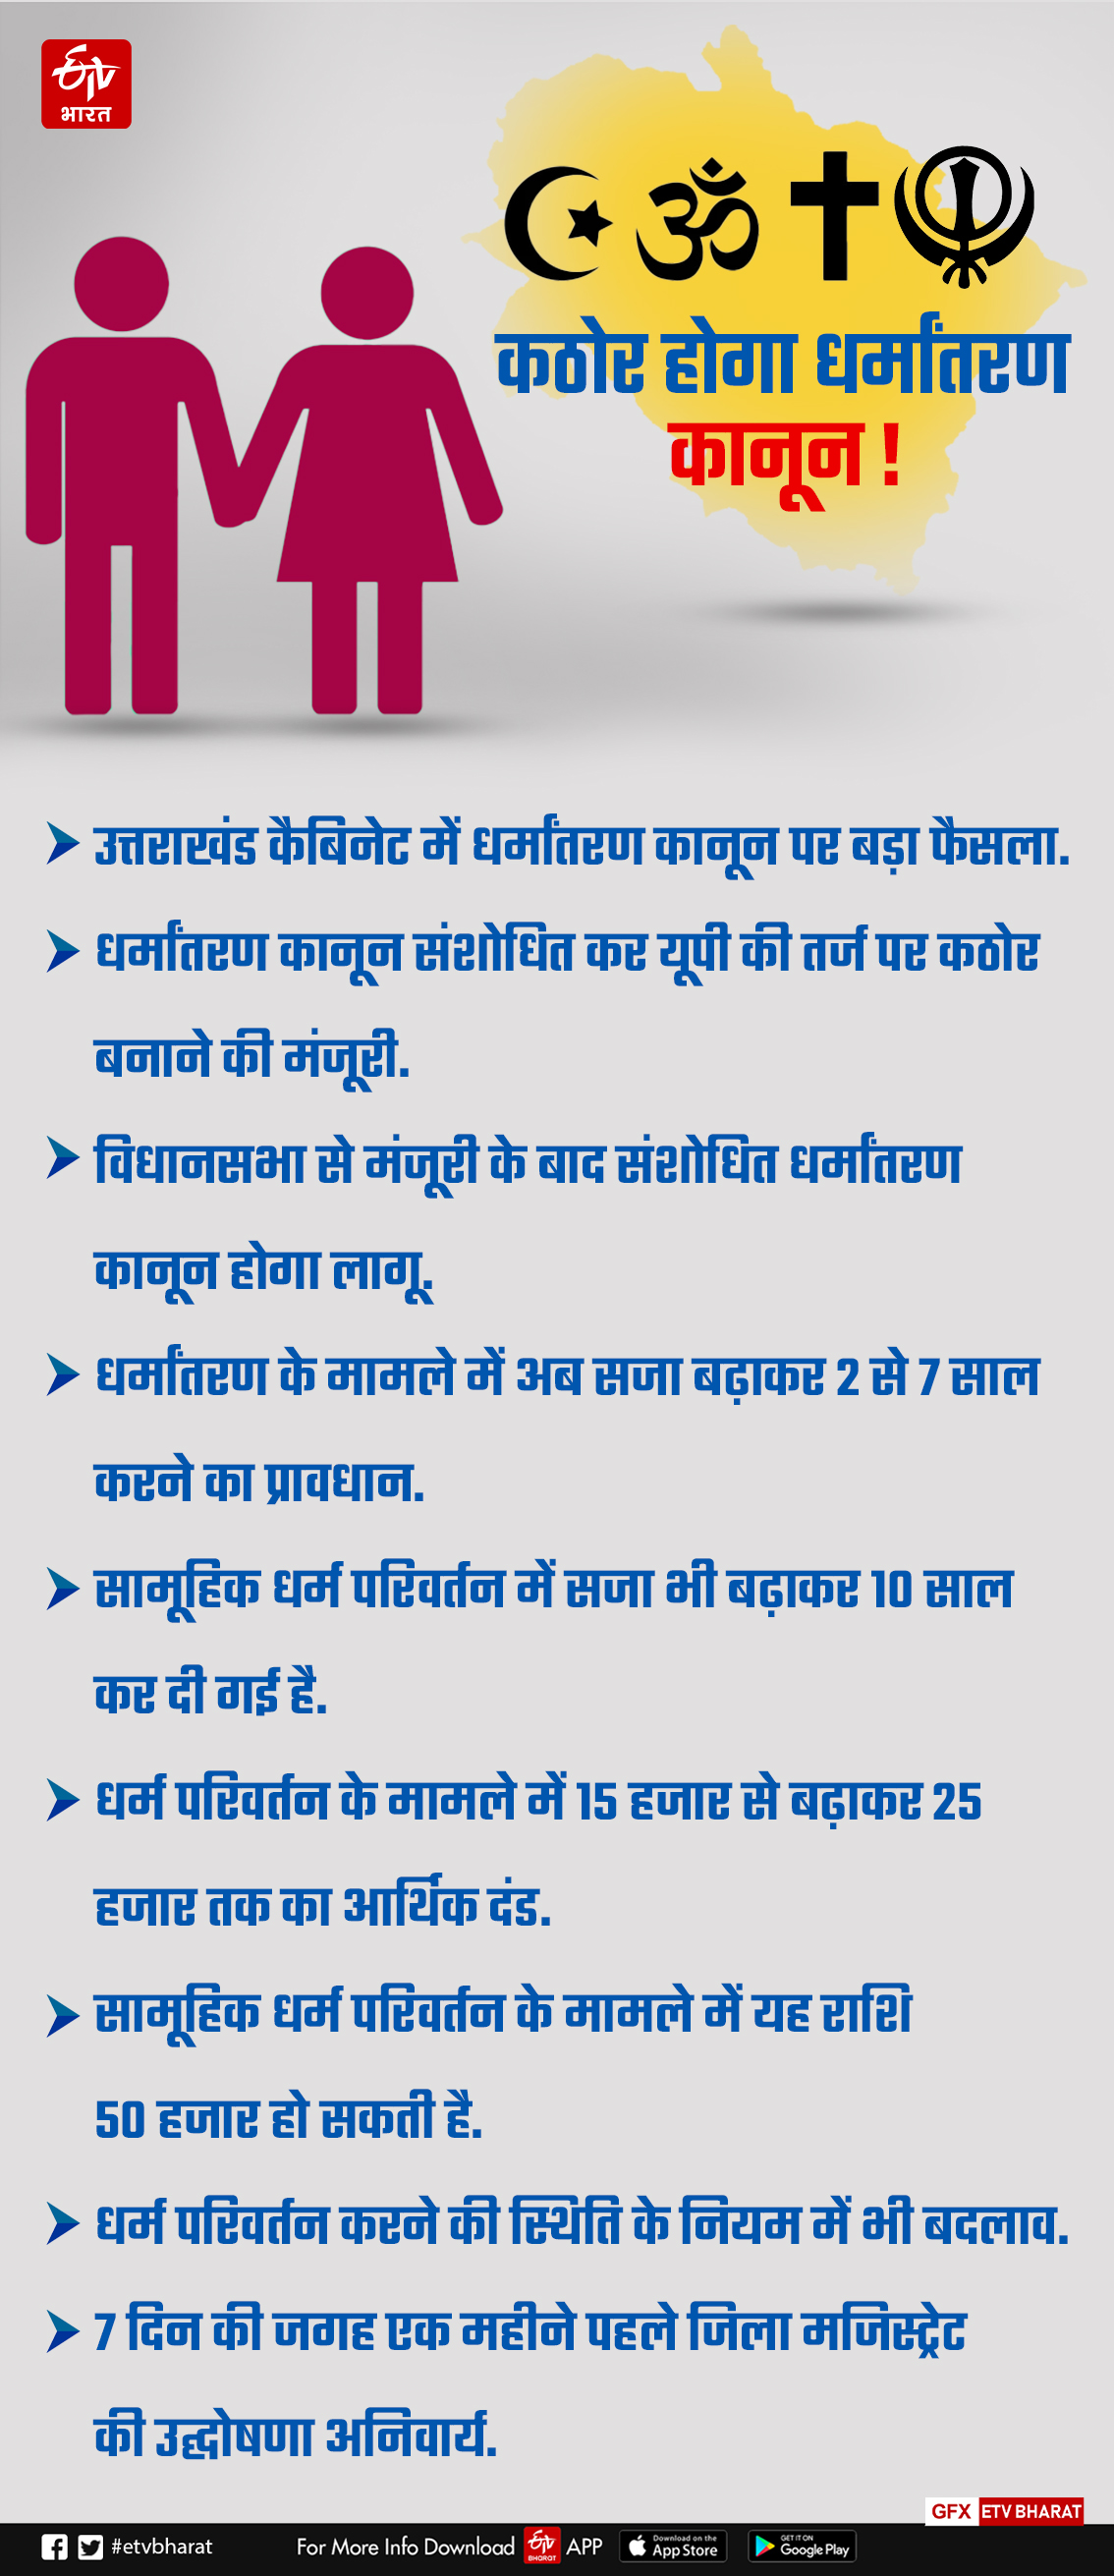 Conversion law in Uttarakhand